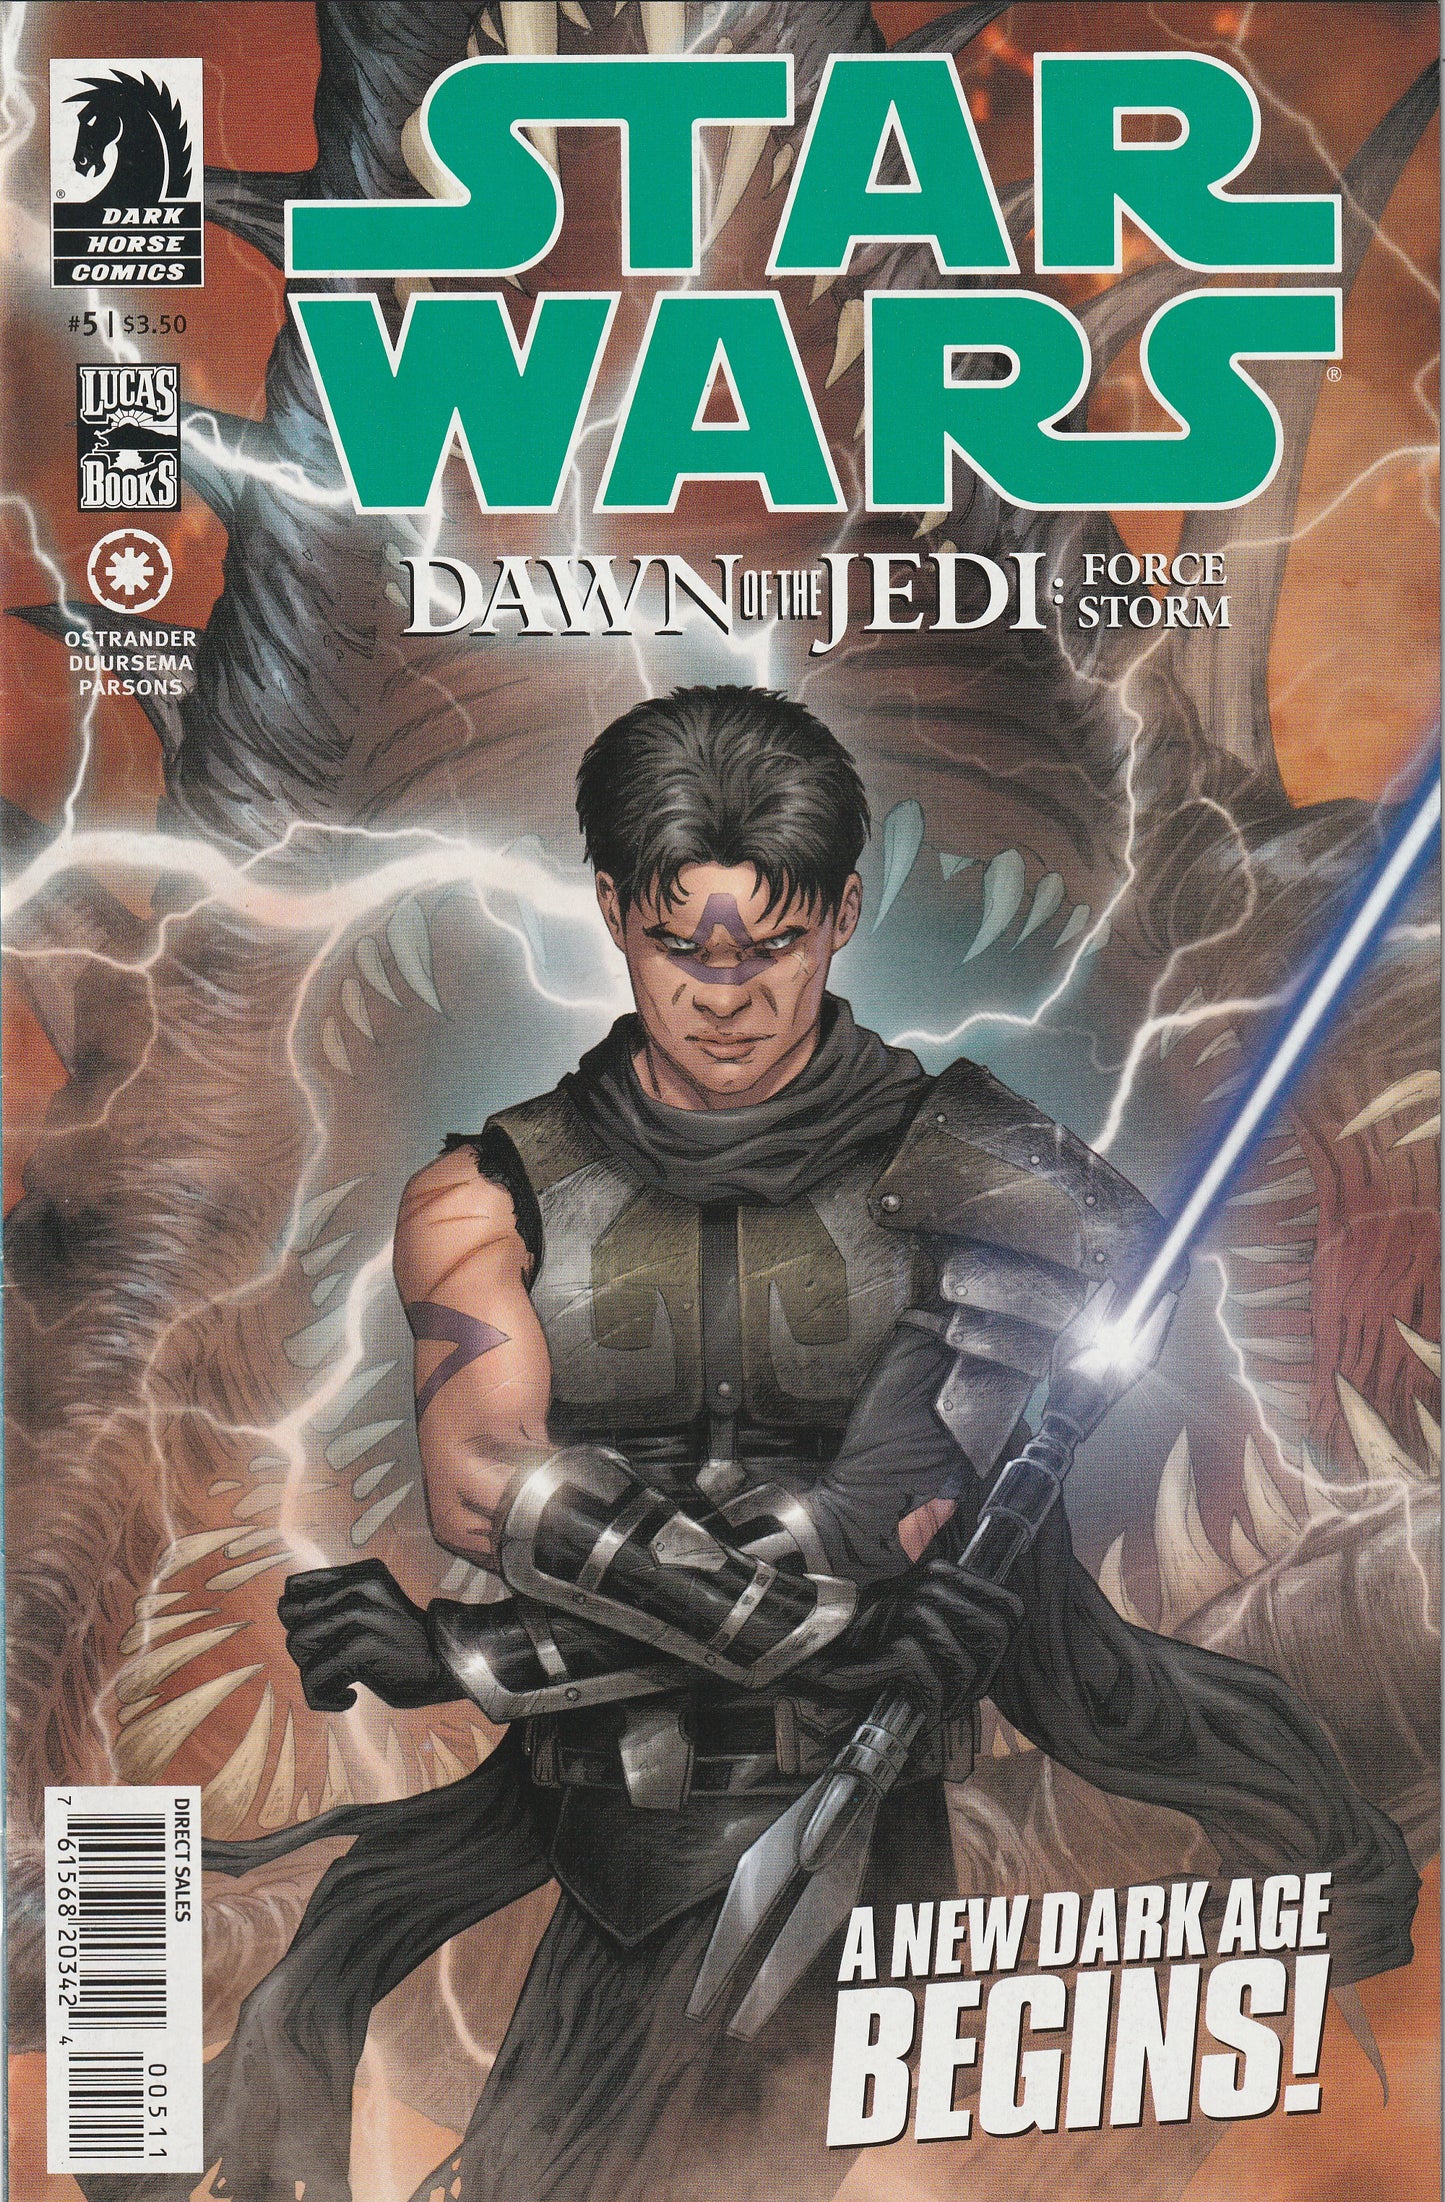 Star Wars: Dawn of the Jedi - Force Storm #5 (2012)